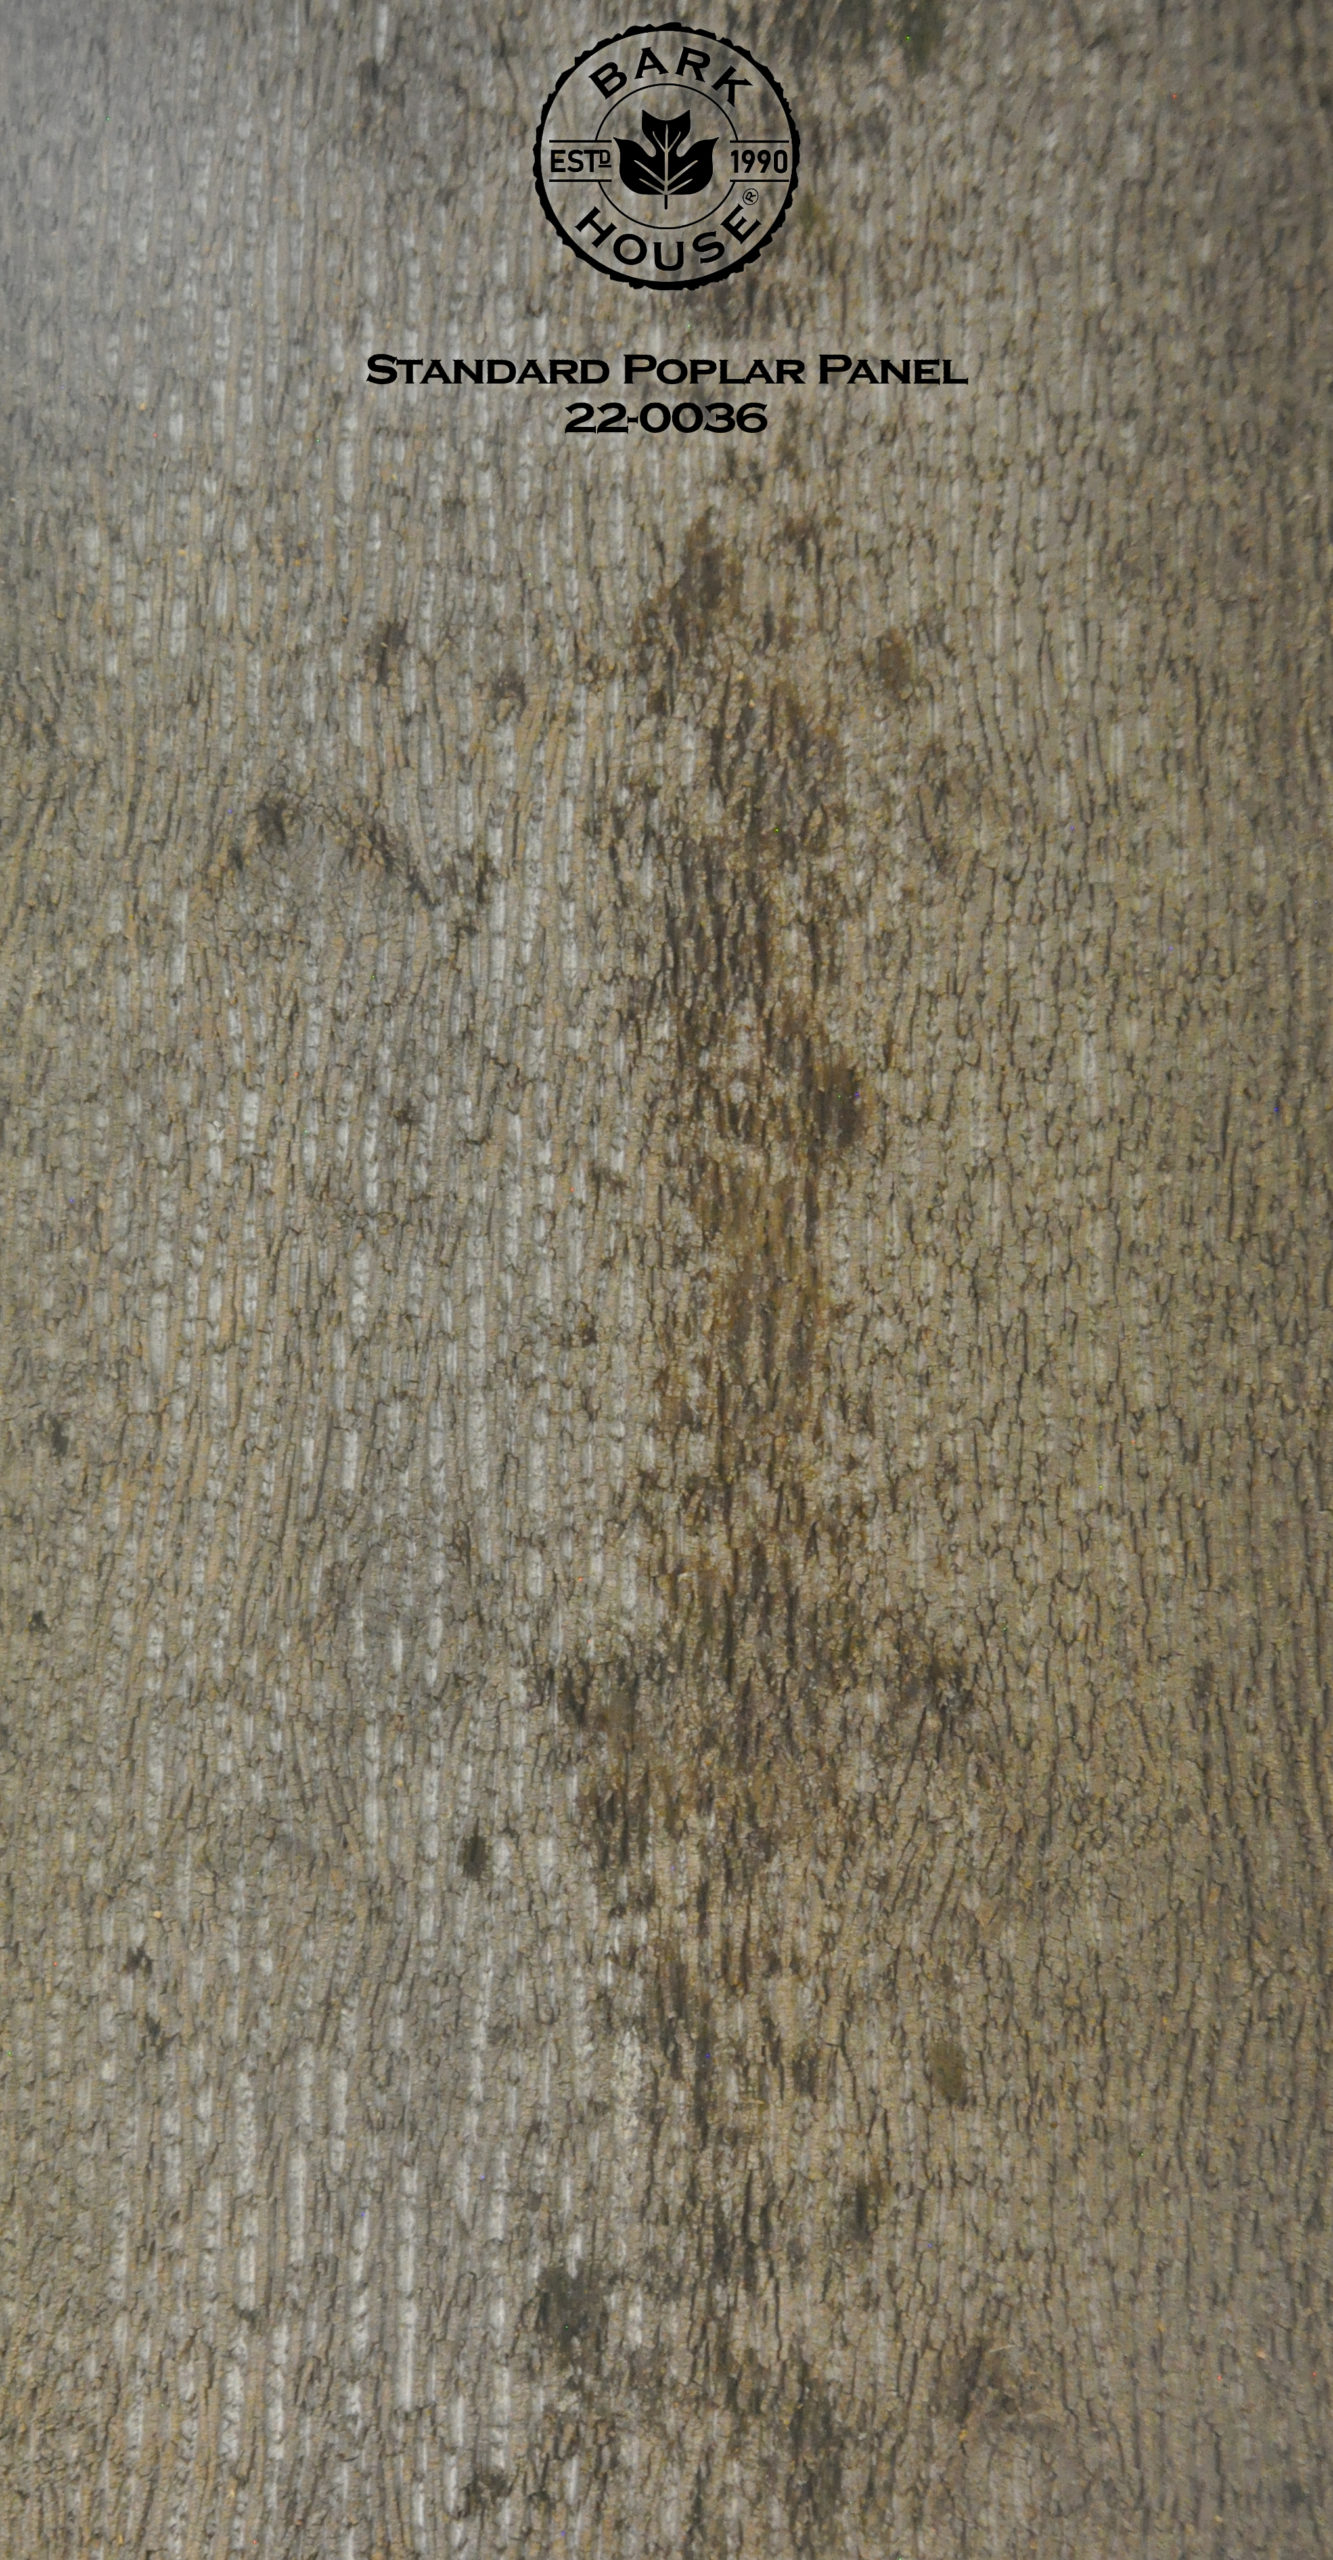 Bark House poplar bark panel SKU POPP-STD-22-0036